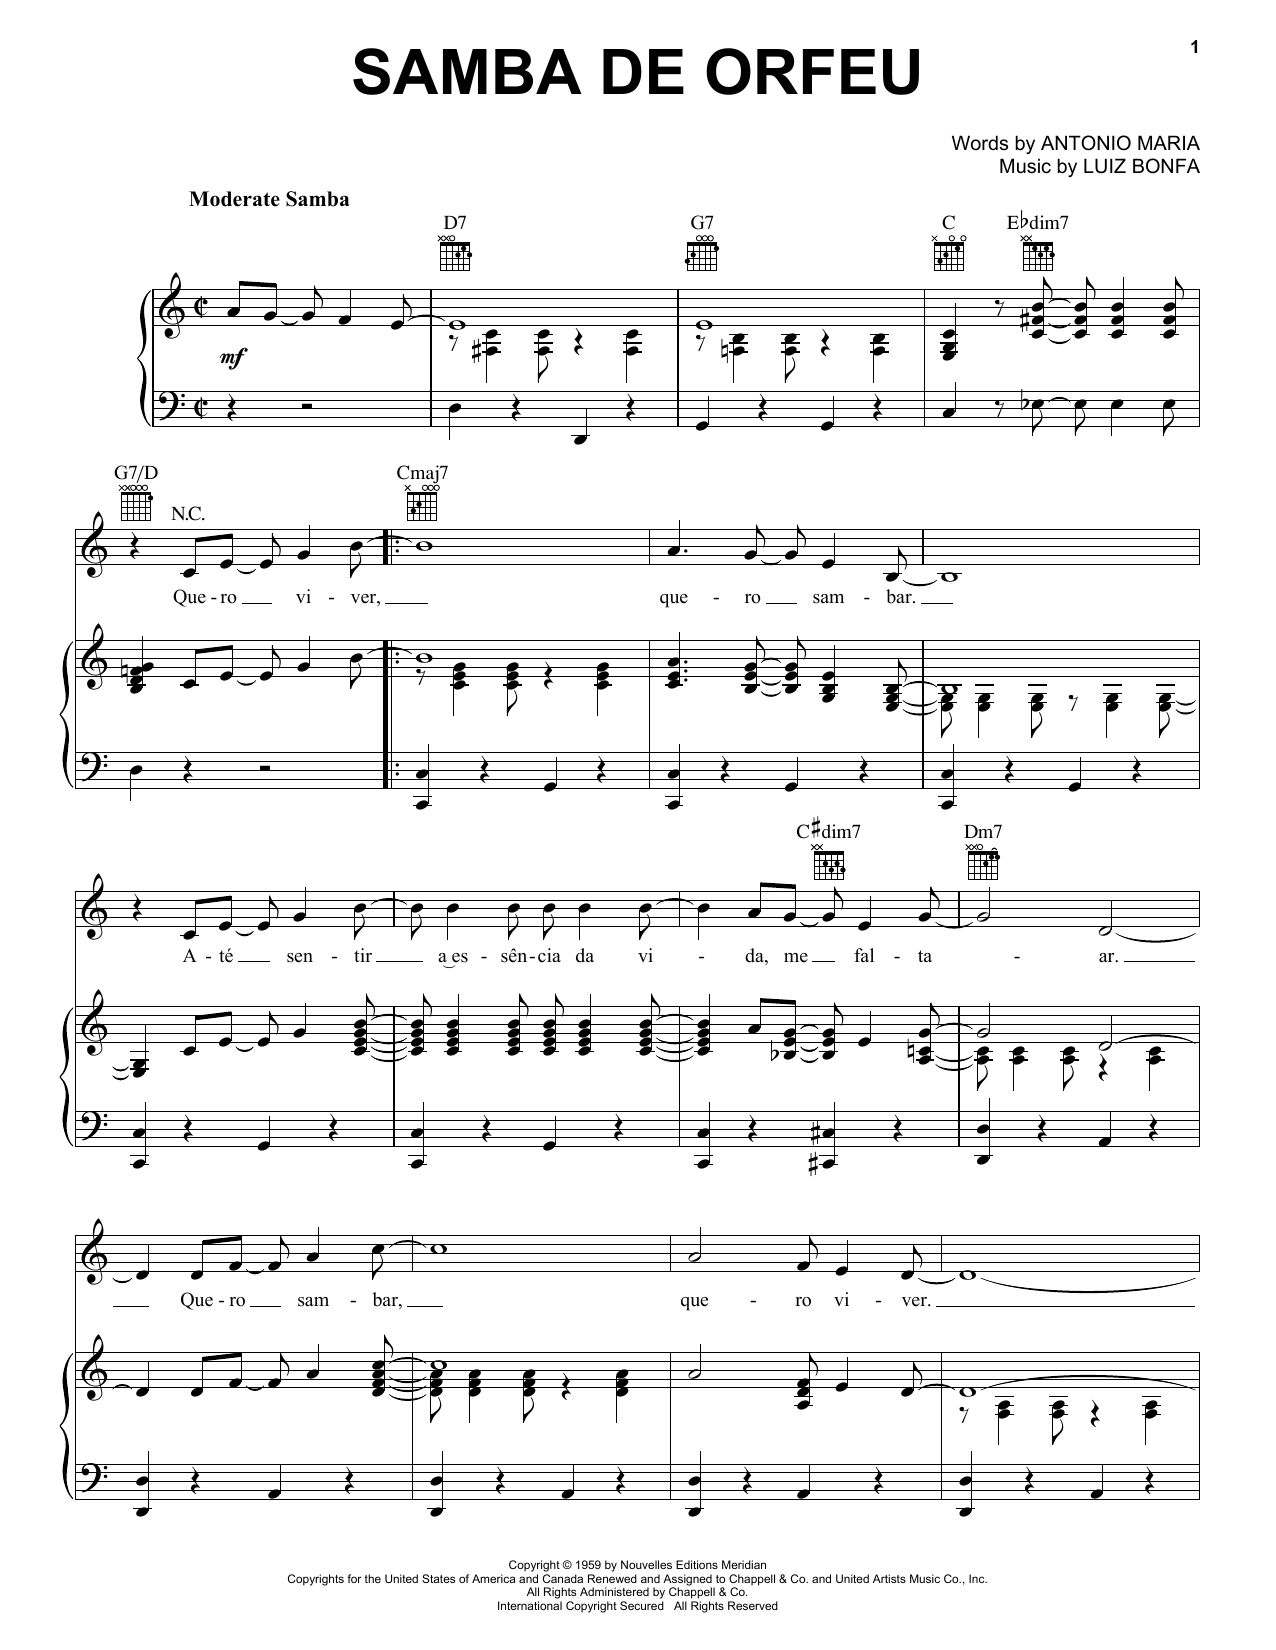 Luiz Bonfa Samba De Orfeu Sheet Music Notes & Chords for Piano, Vocal & Guitar (Right-Hand Melody) - Download or Print PDF